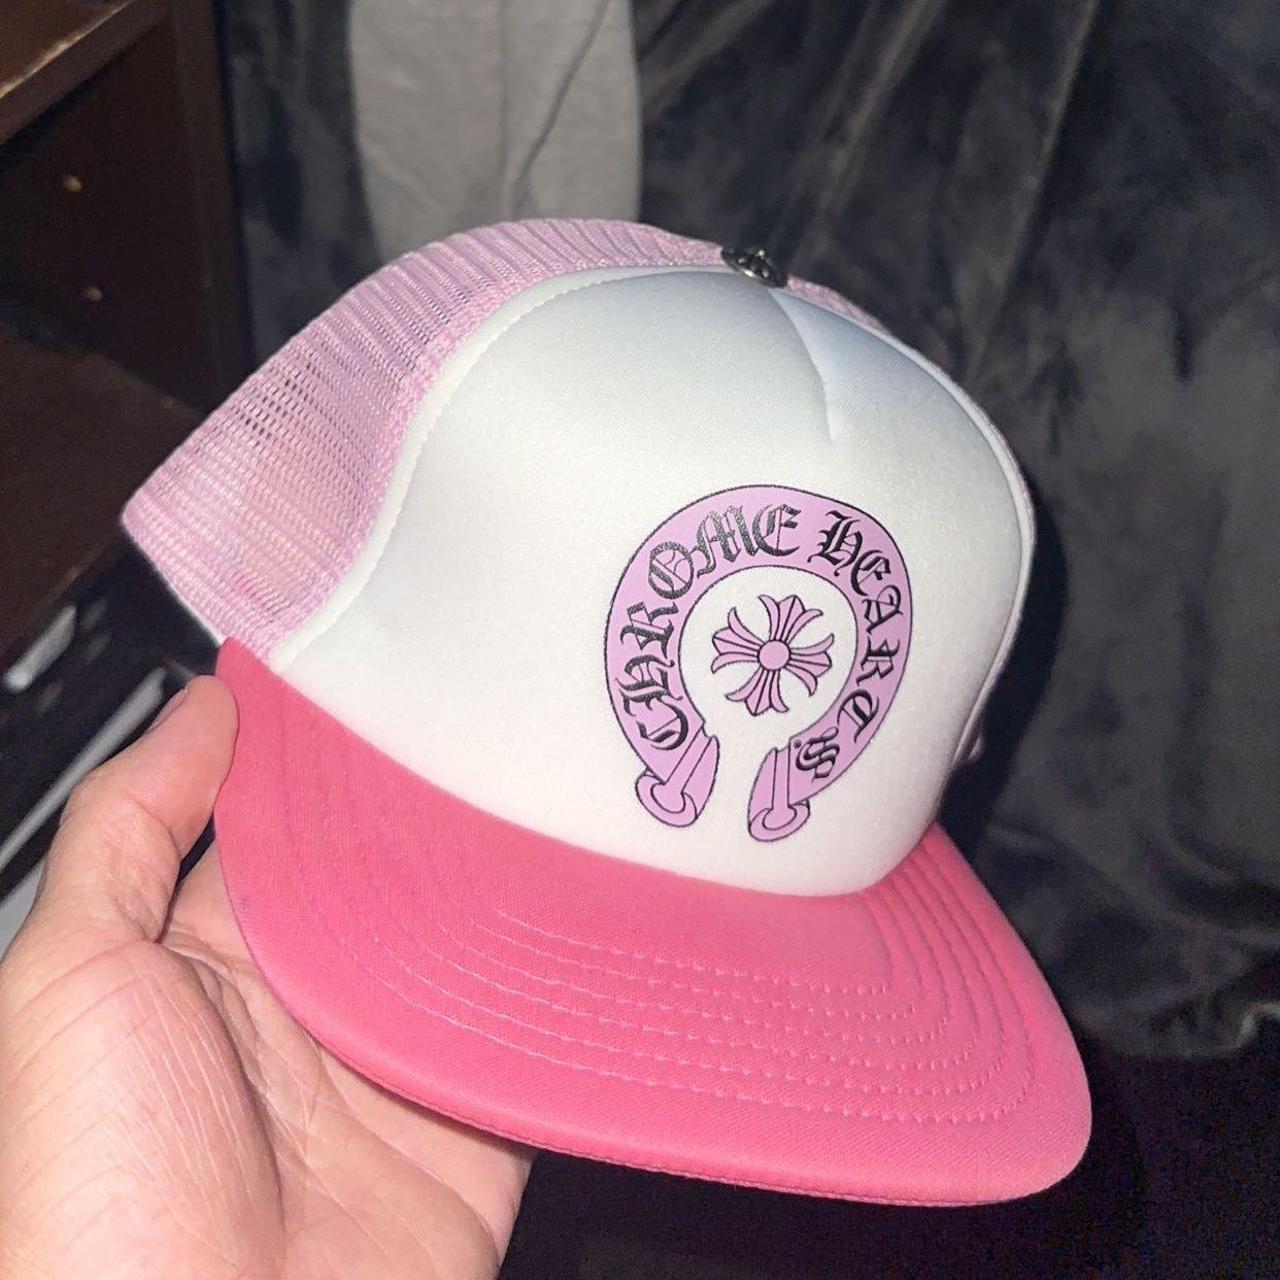 Chrome Hearts hat (matty boy collection) pink/black - Depop